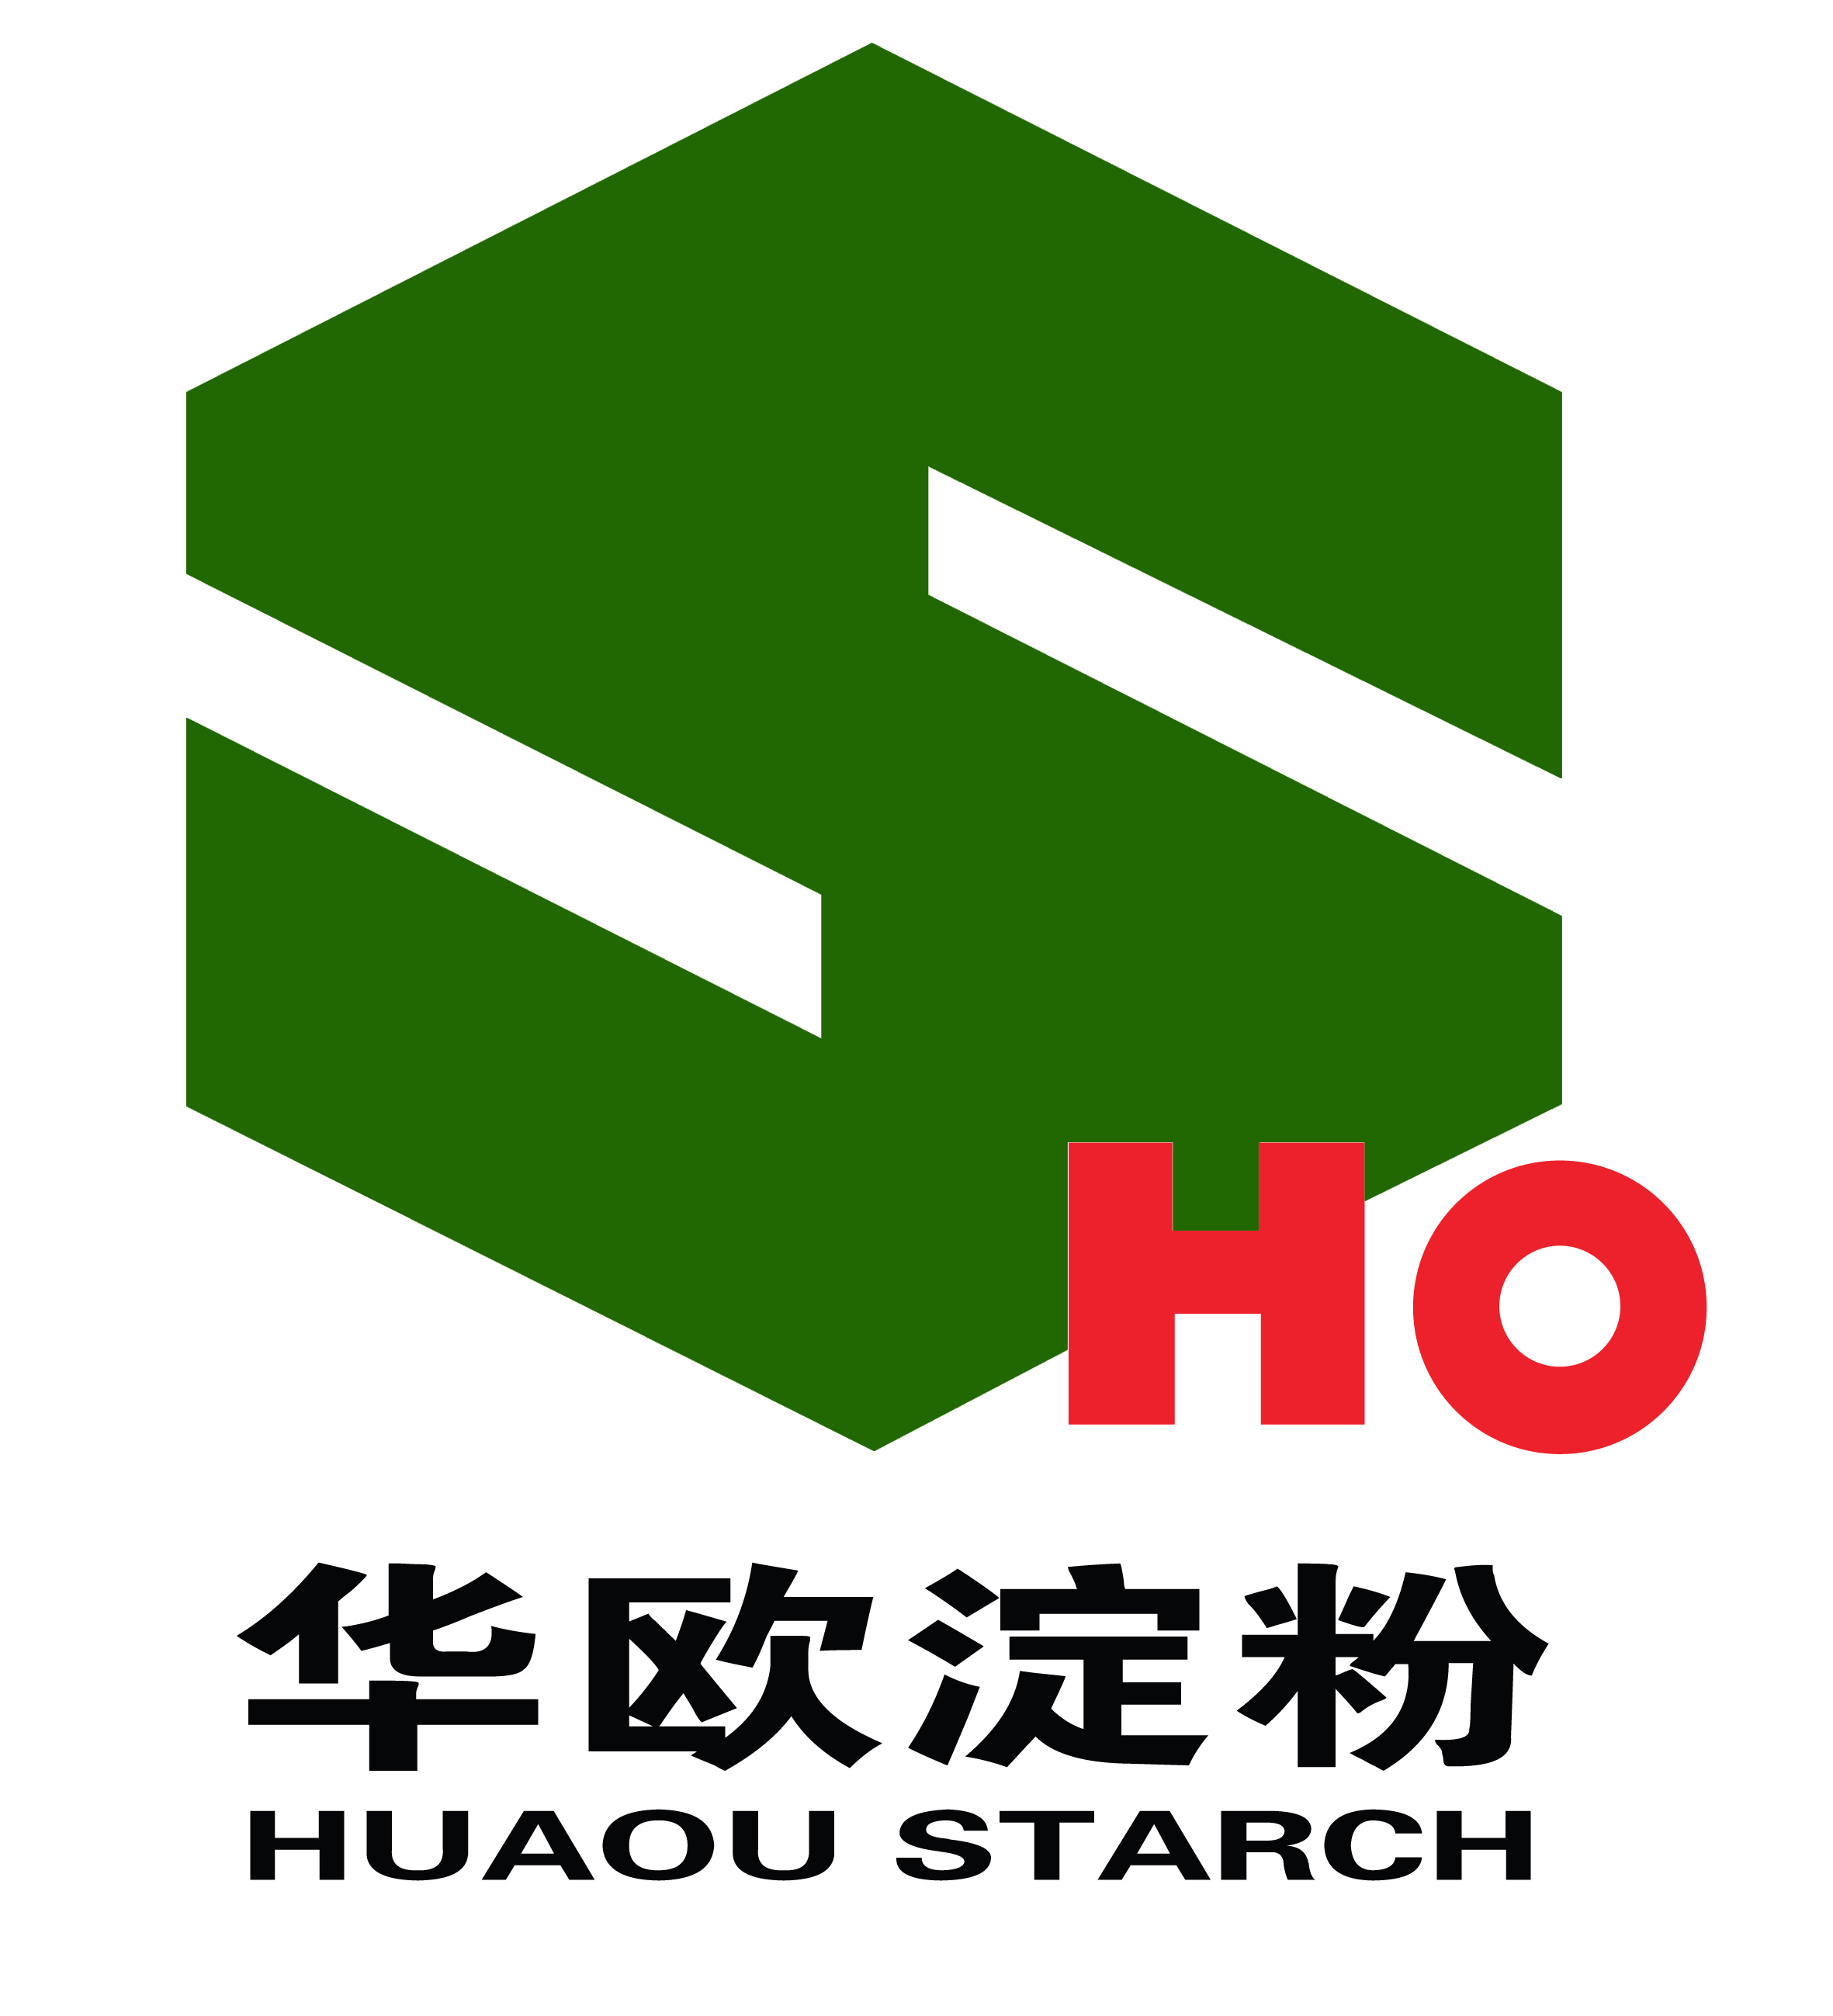 Inner Mongolia Huaou Starch Industry Co., Ltd